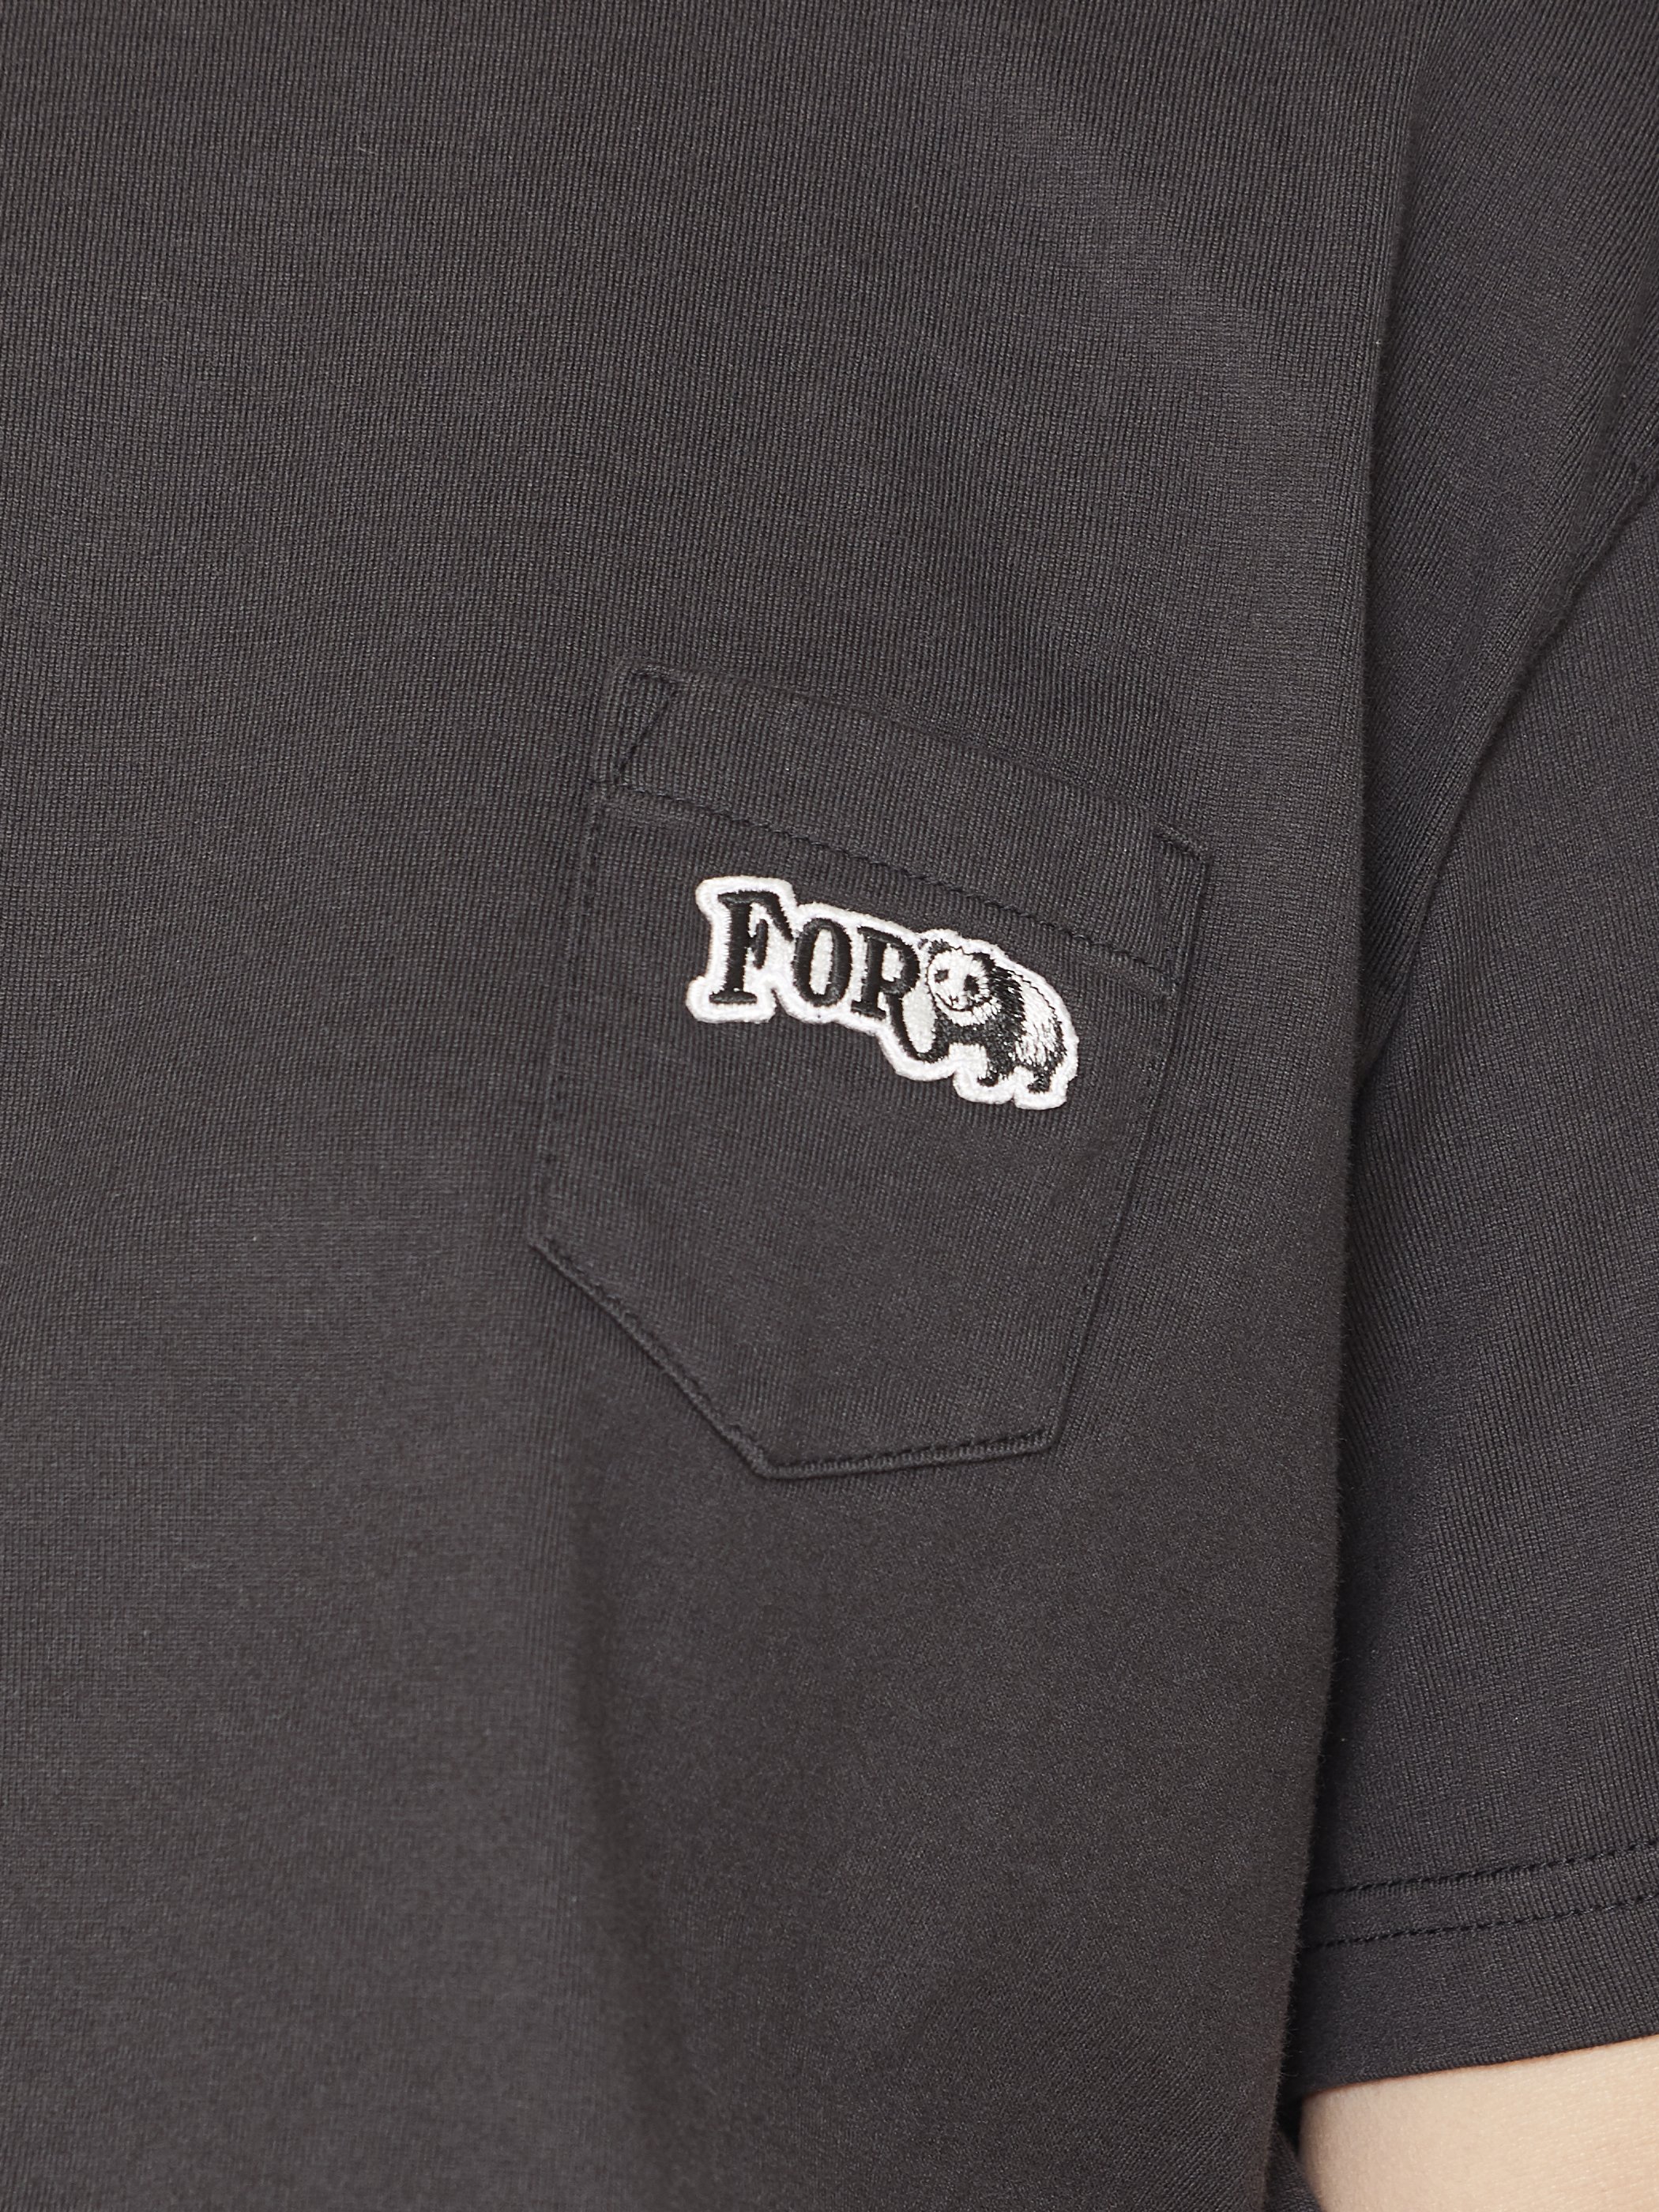 FOR PANDA pocket t-shirt・BLACK